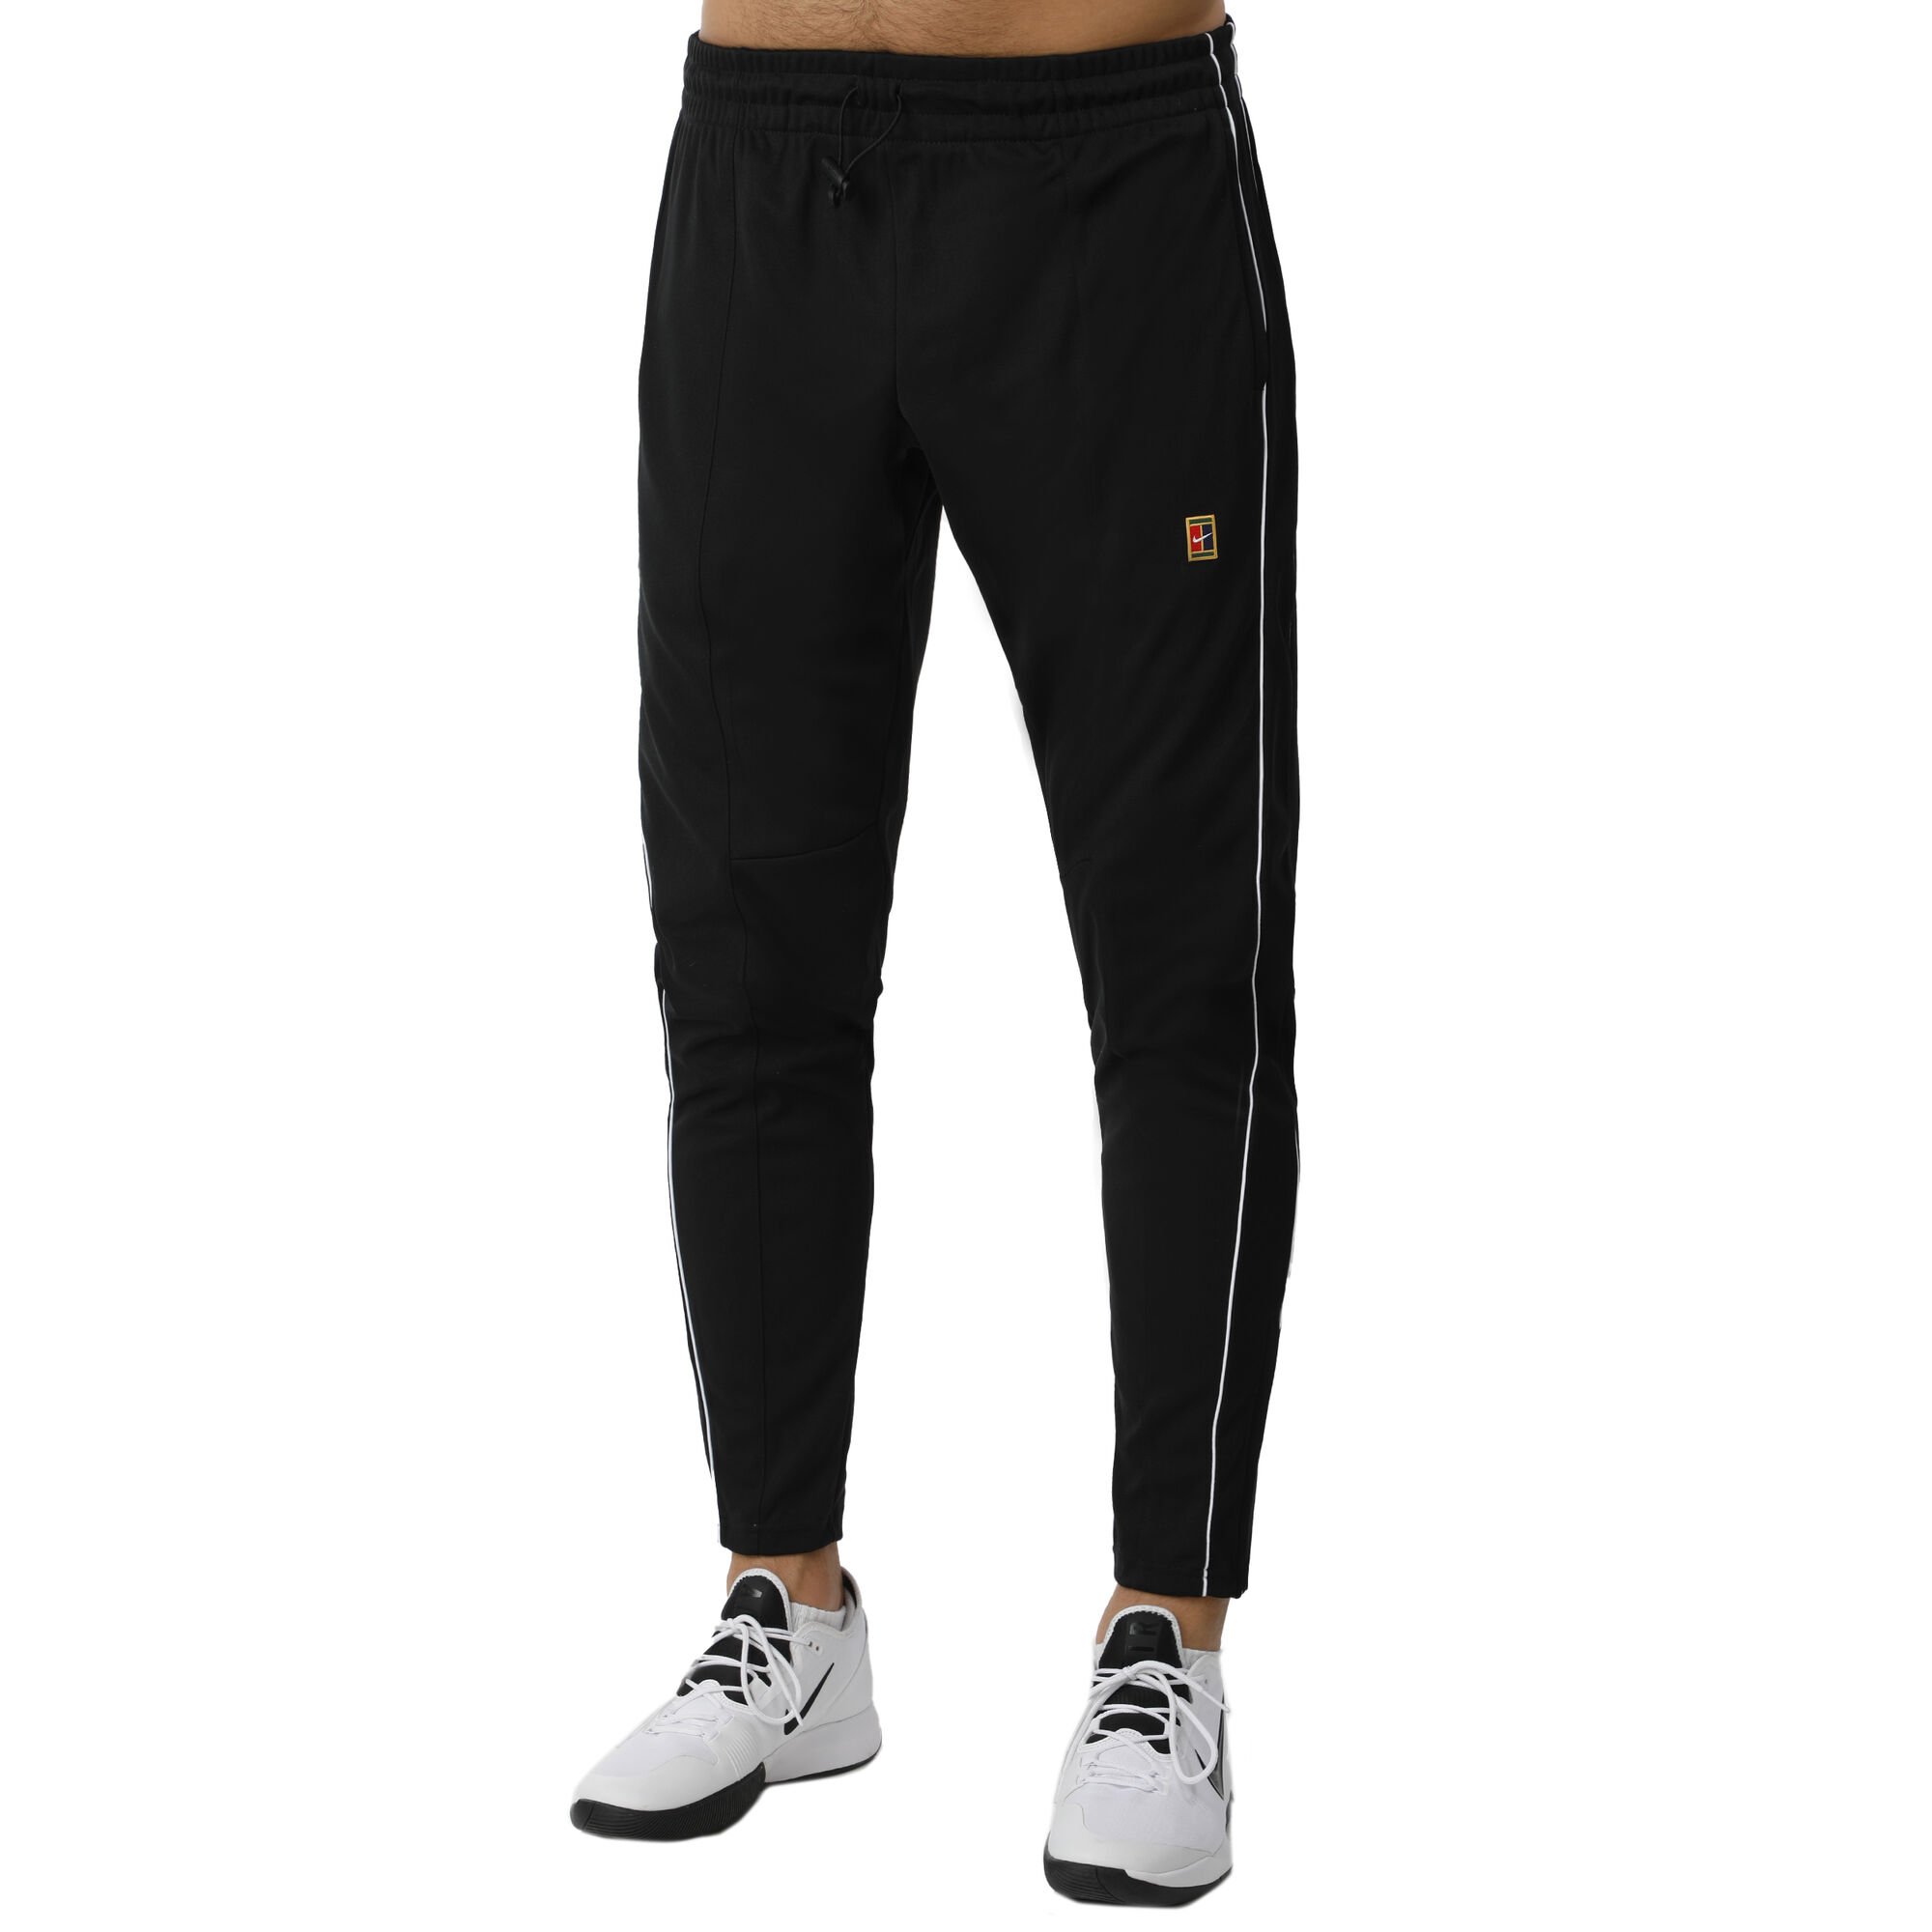 Buy Nike Court Essential Training Pants Men Black, White online